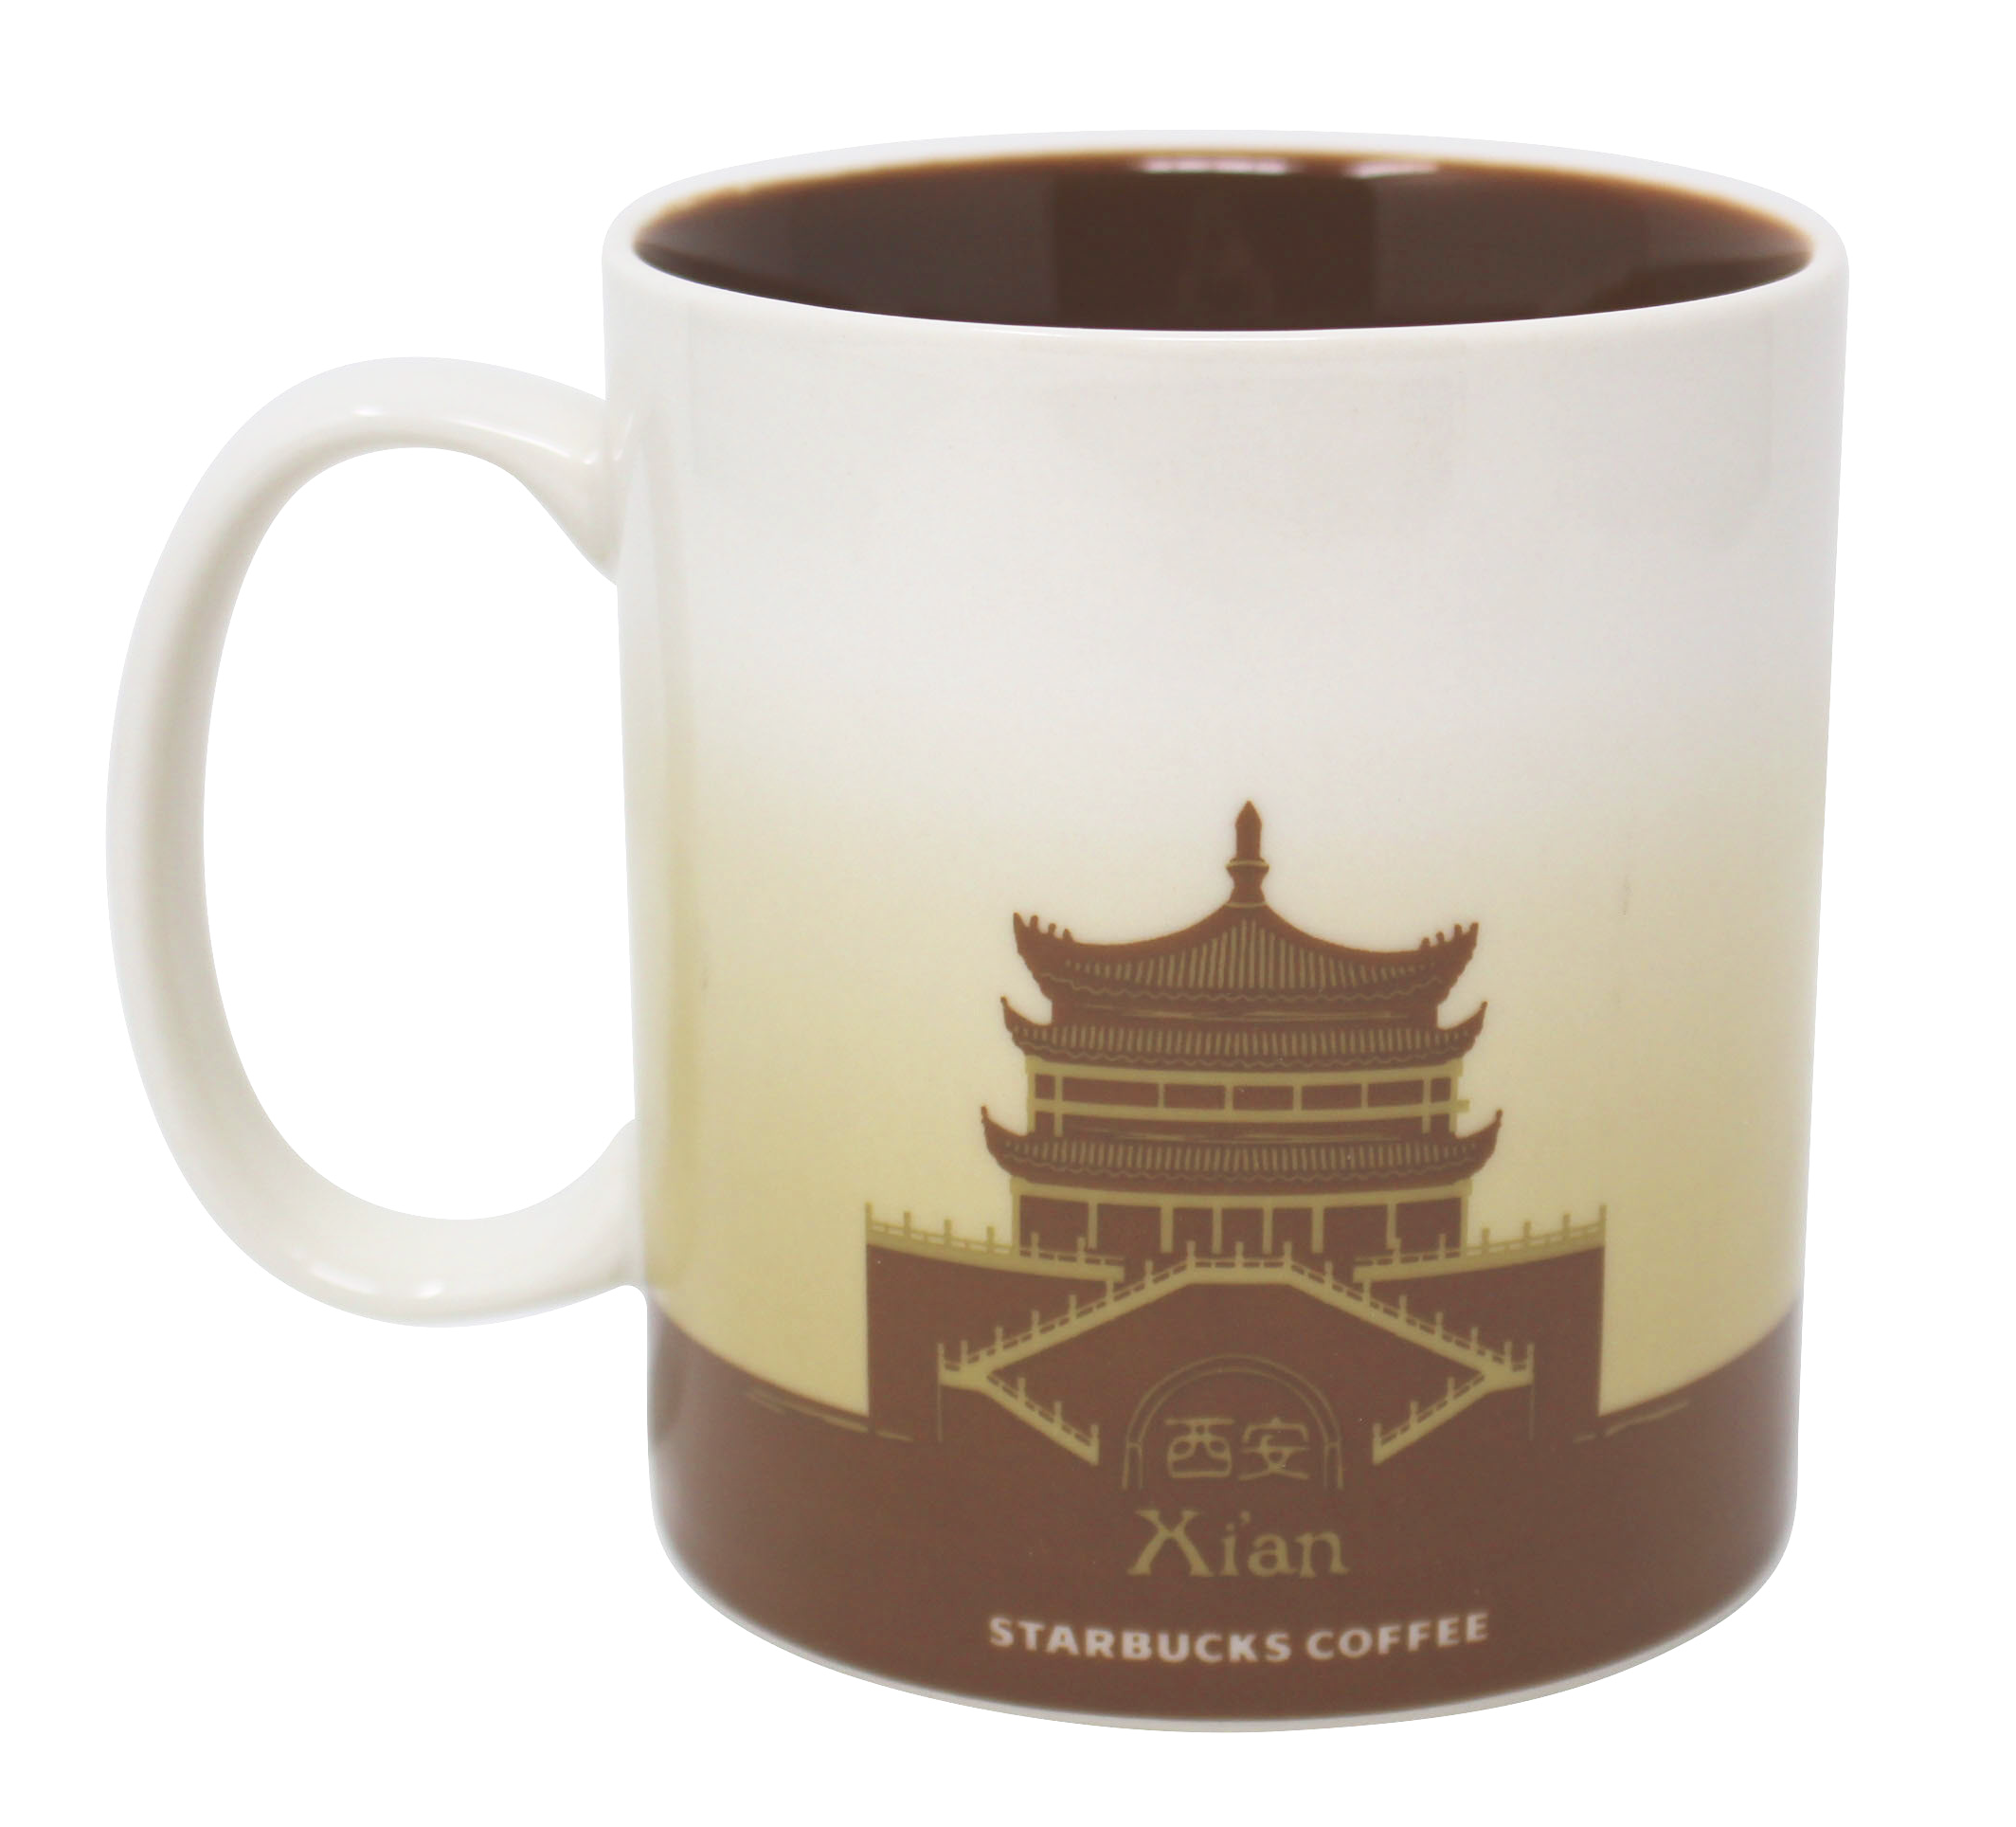 Starbucks Global Icon Series Xi'An Ceramic Mug, 16 Oz